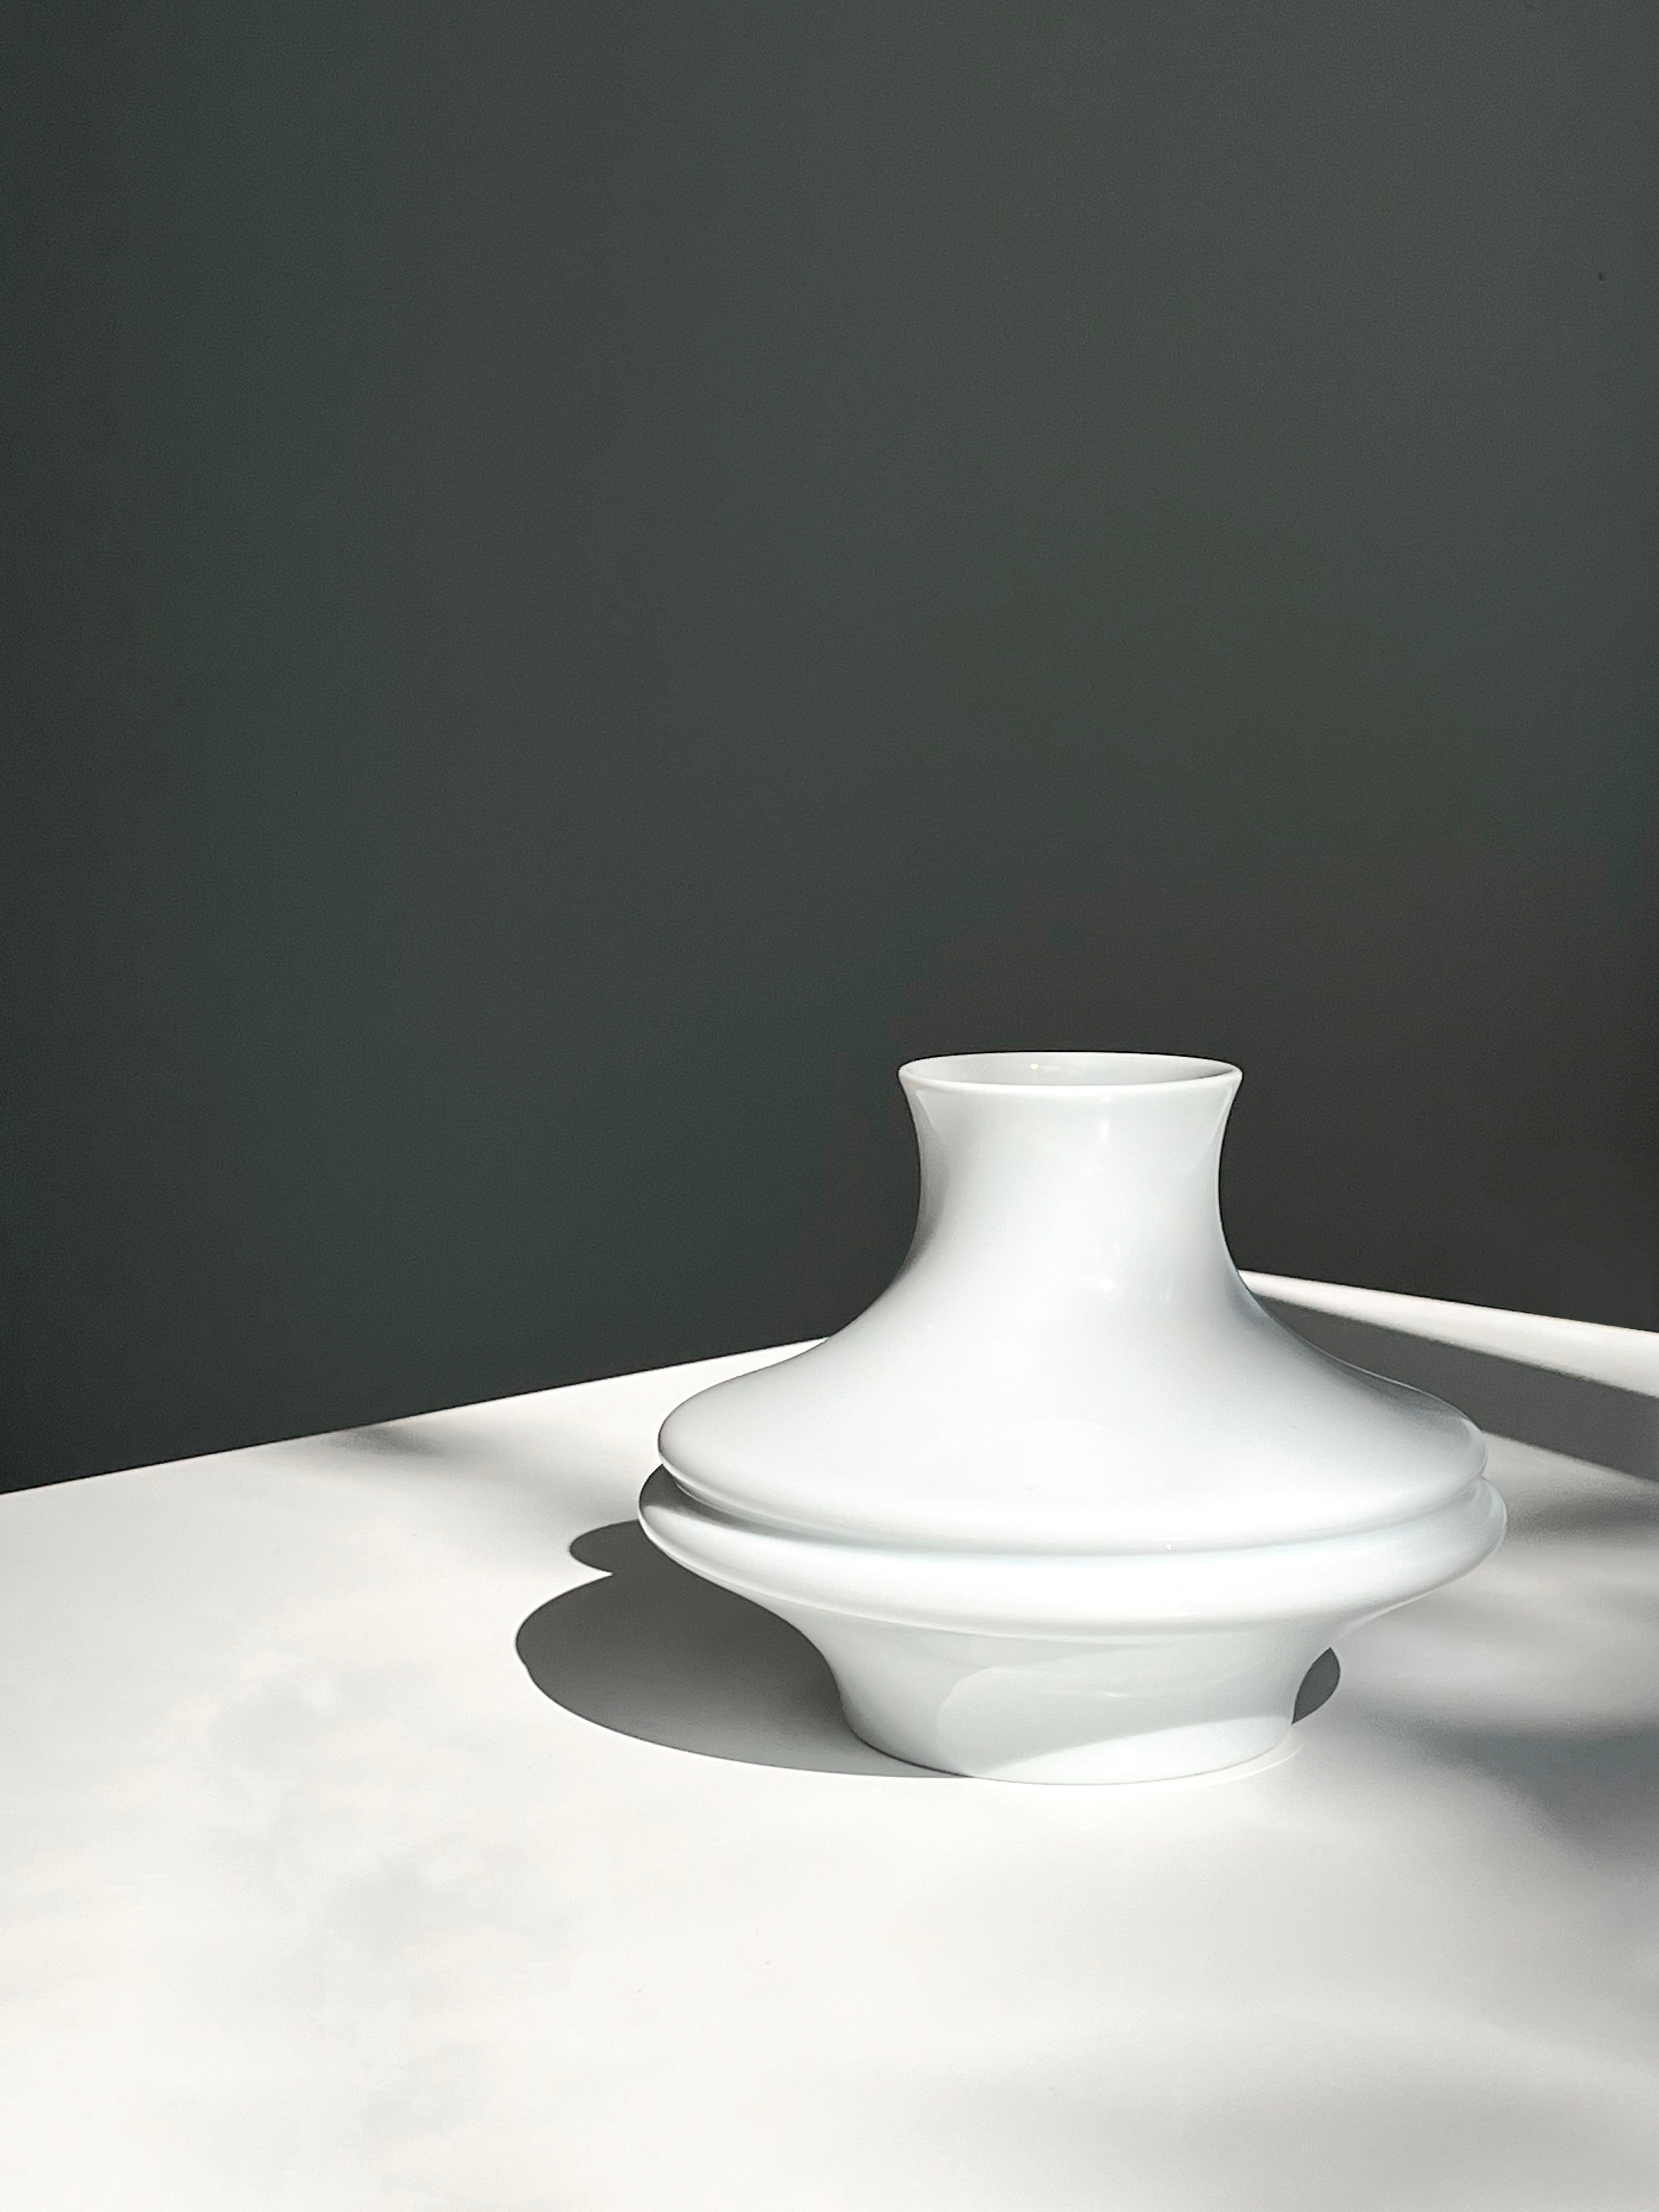 Vintage Rosenthal Studio-Linie Flower Vase White Porcelain/ローゼンタール スタジオライン フラワーベース 3537/12 花瓶 白磁 ヴィンテージインテリア